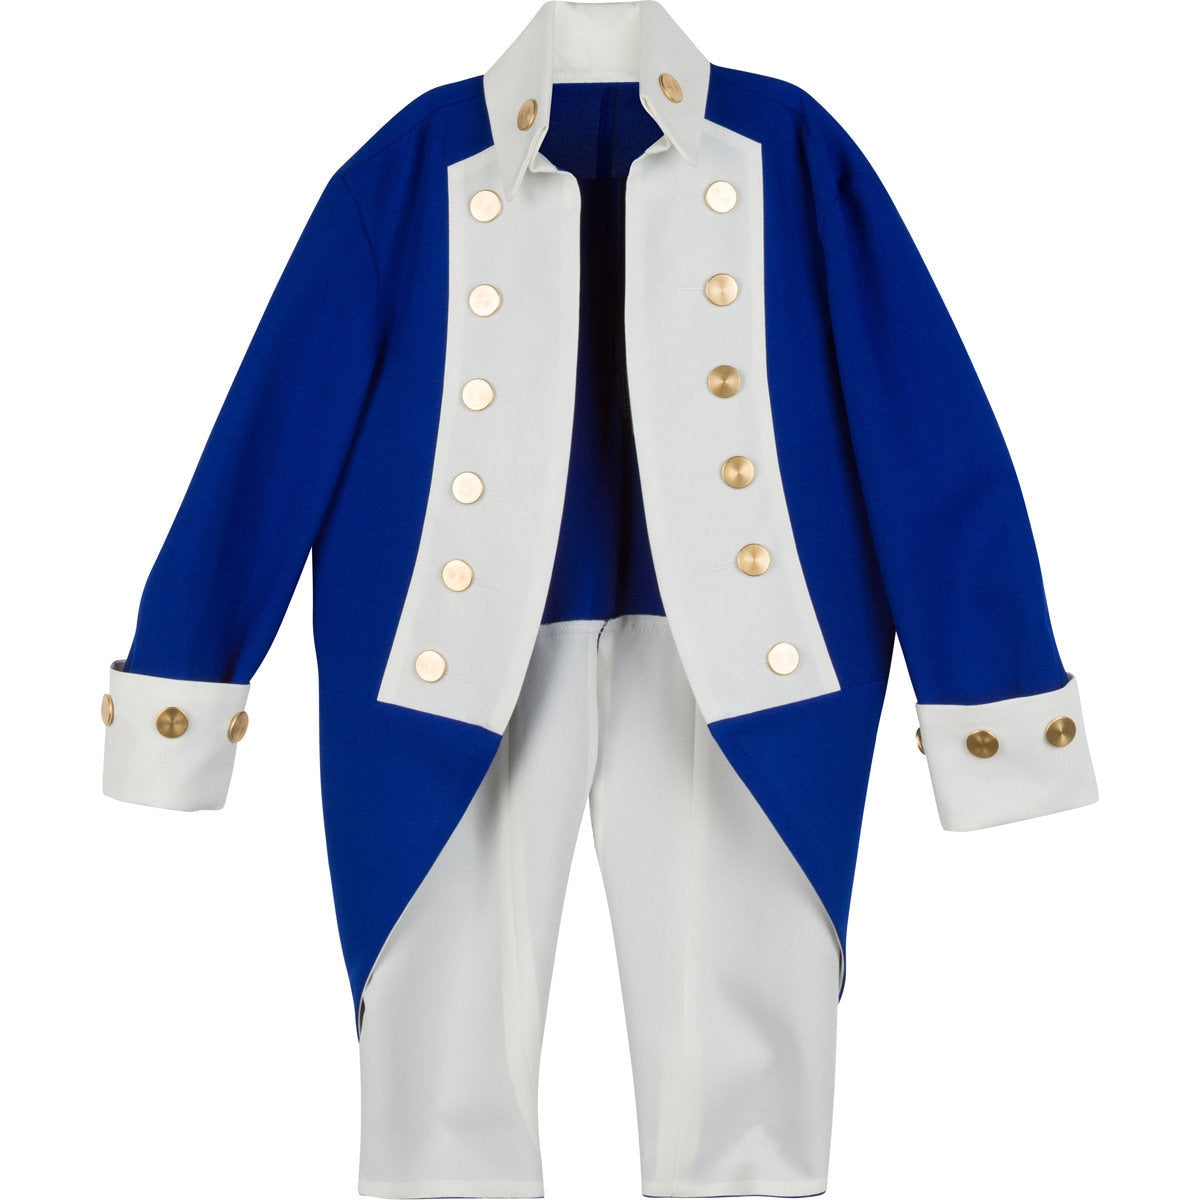 Children's Uniform Jackets of the American Revolution